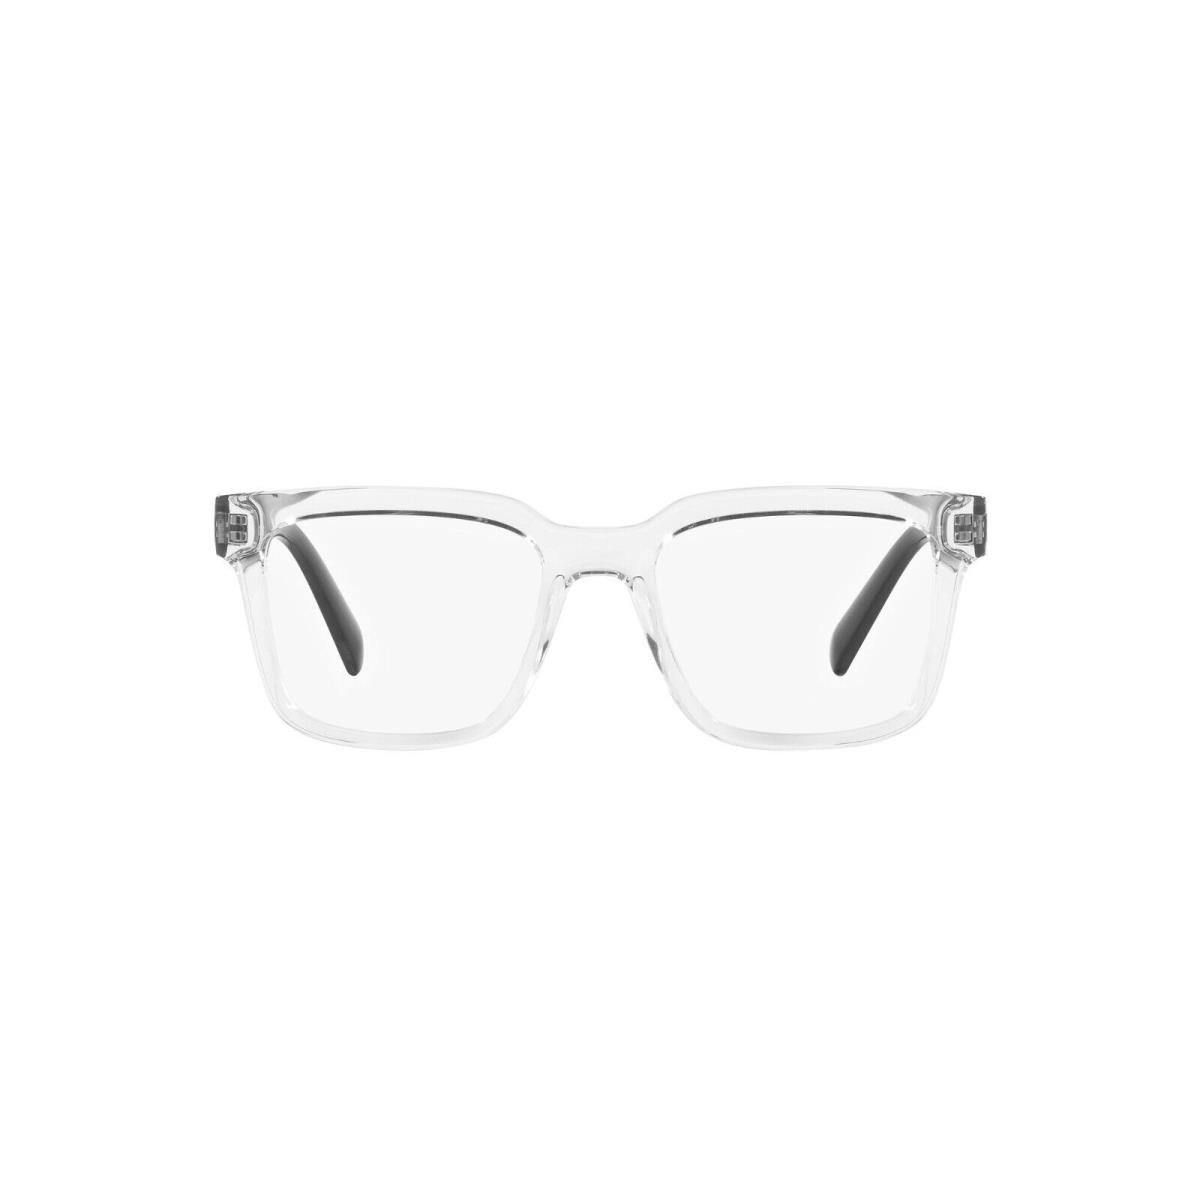 Dolce Gabbana DG 5101 Crystal 3133 Eyeglasses